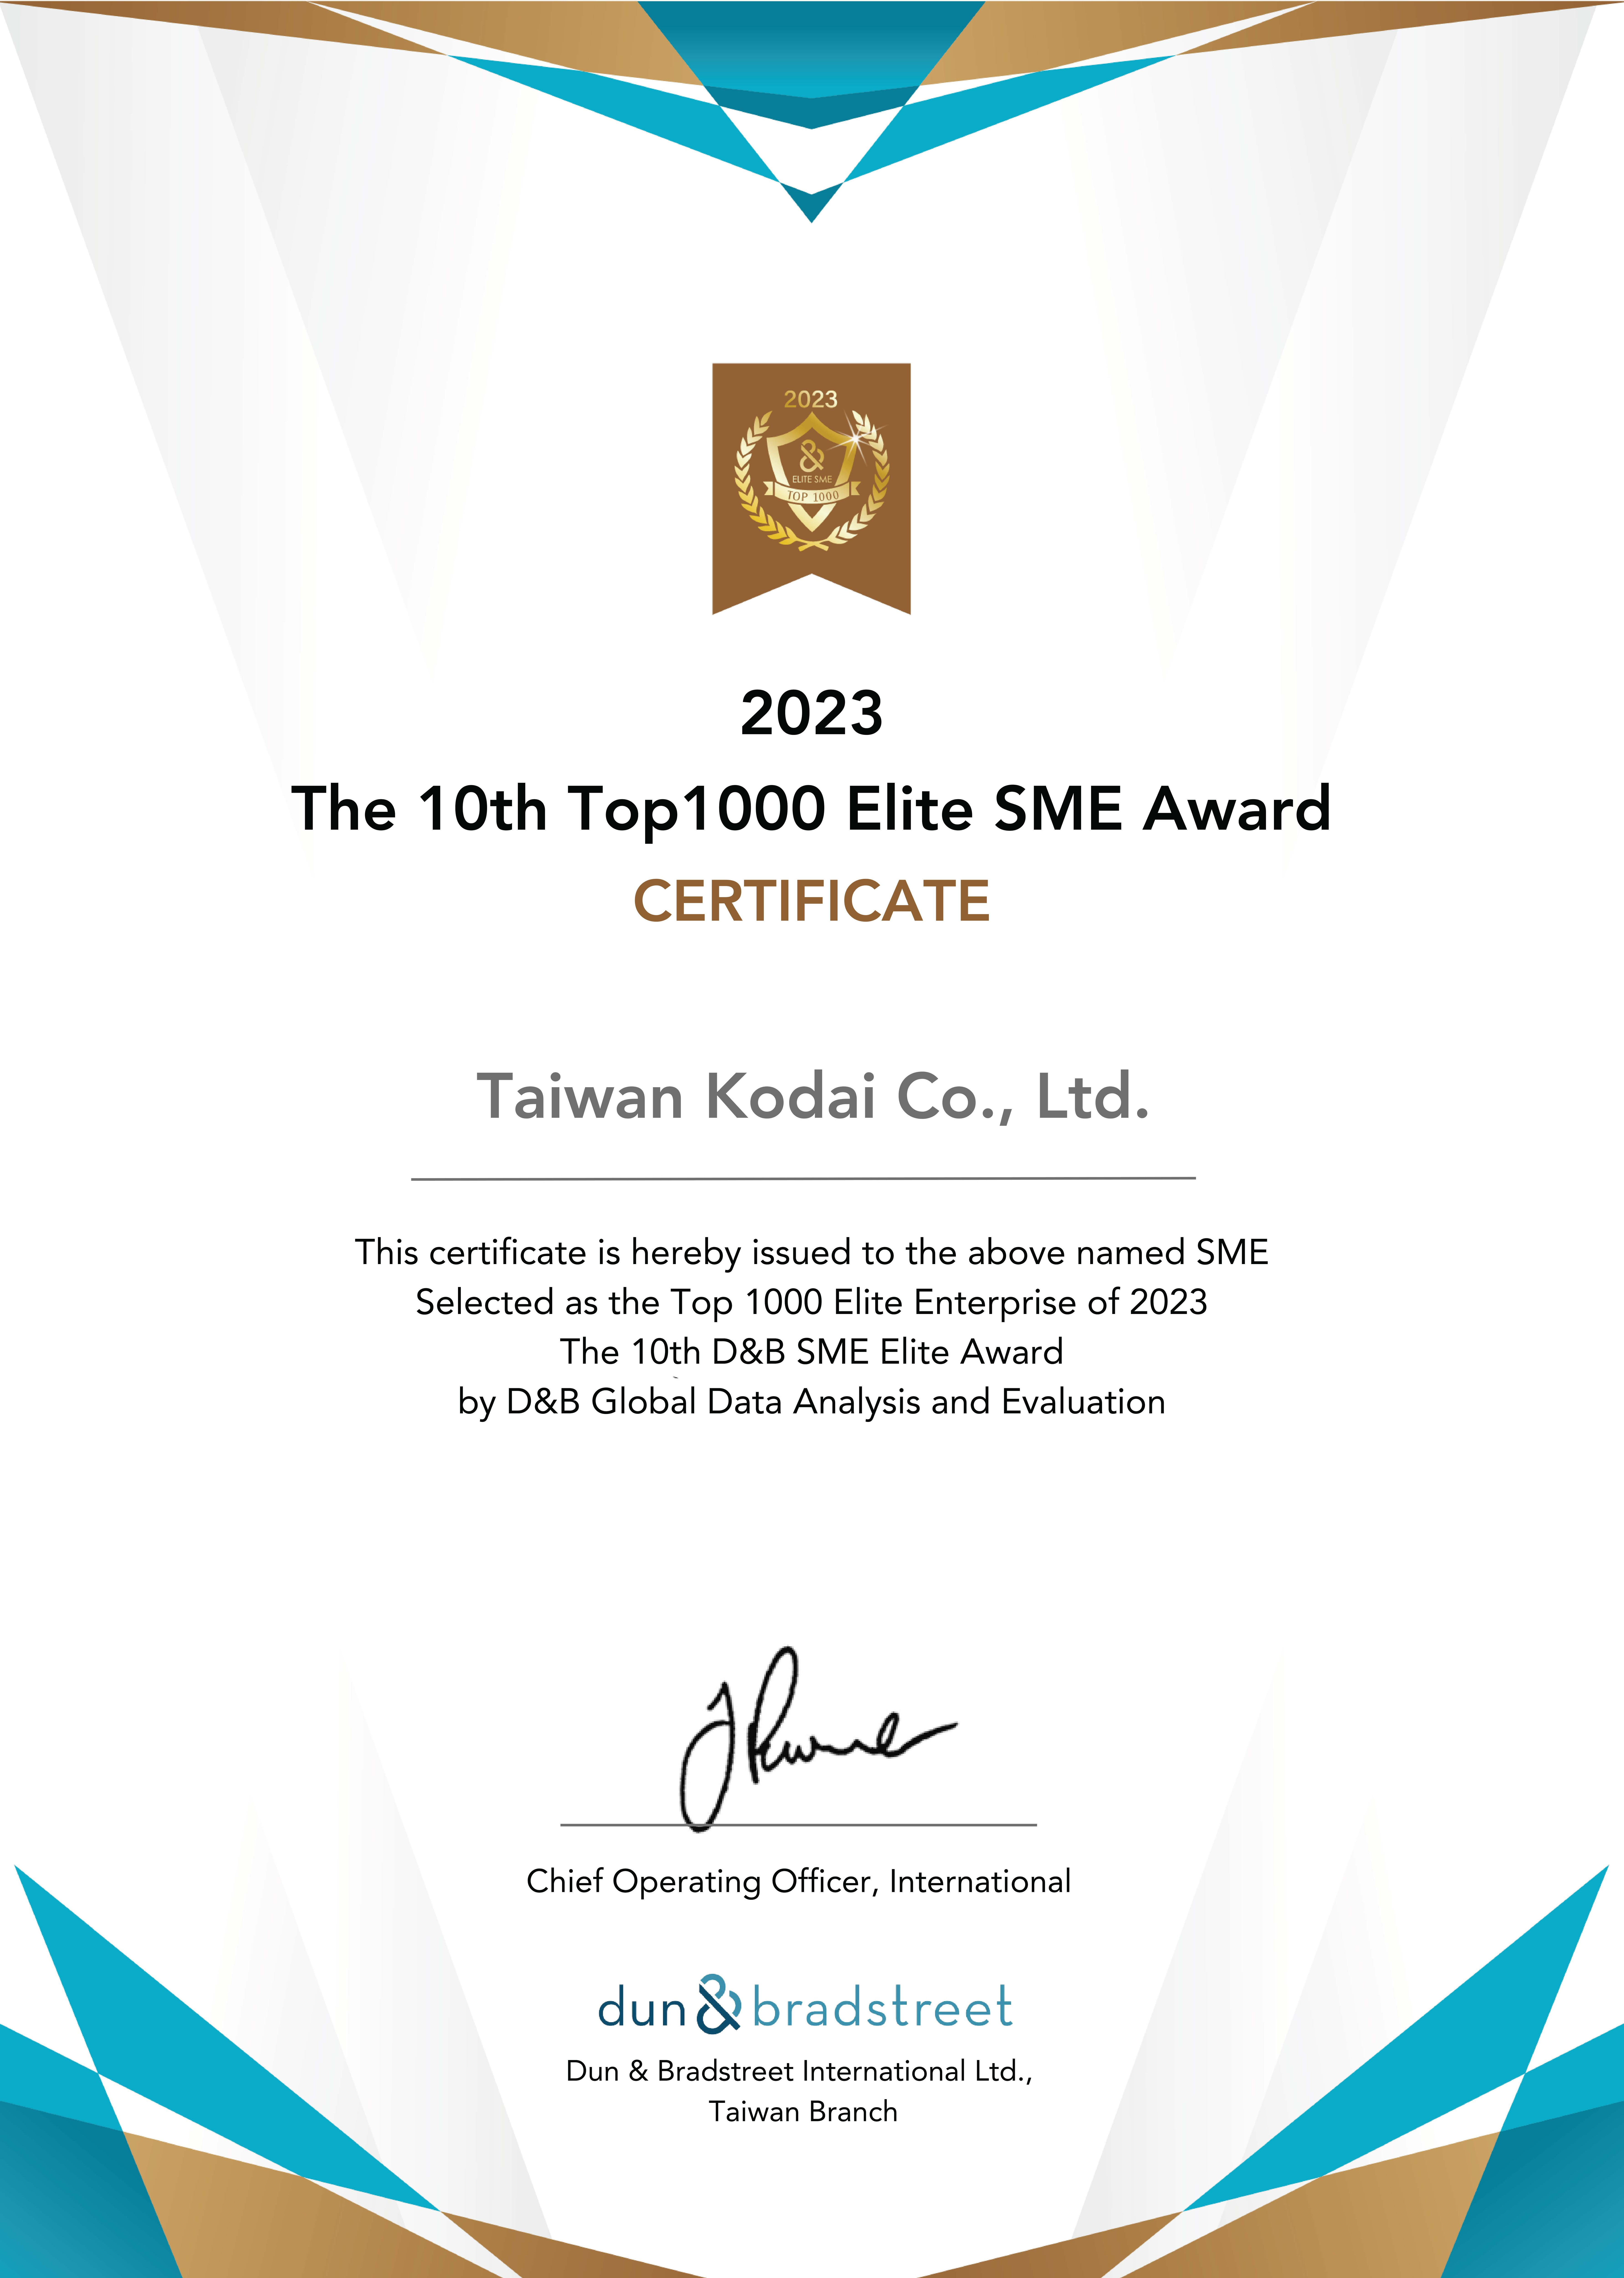 2023 D&B TOP 1000 ELITE SME AWARD